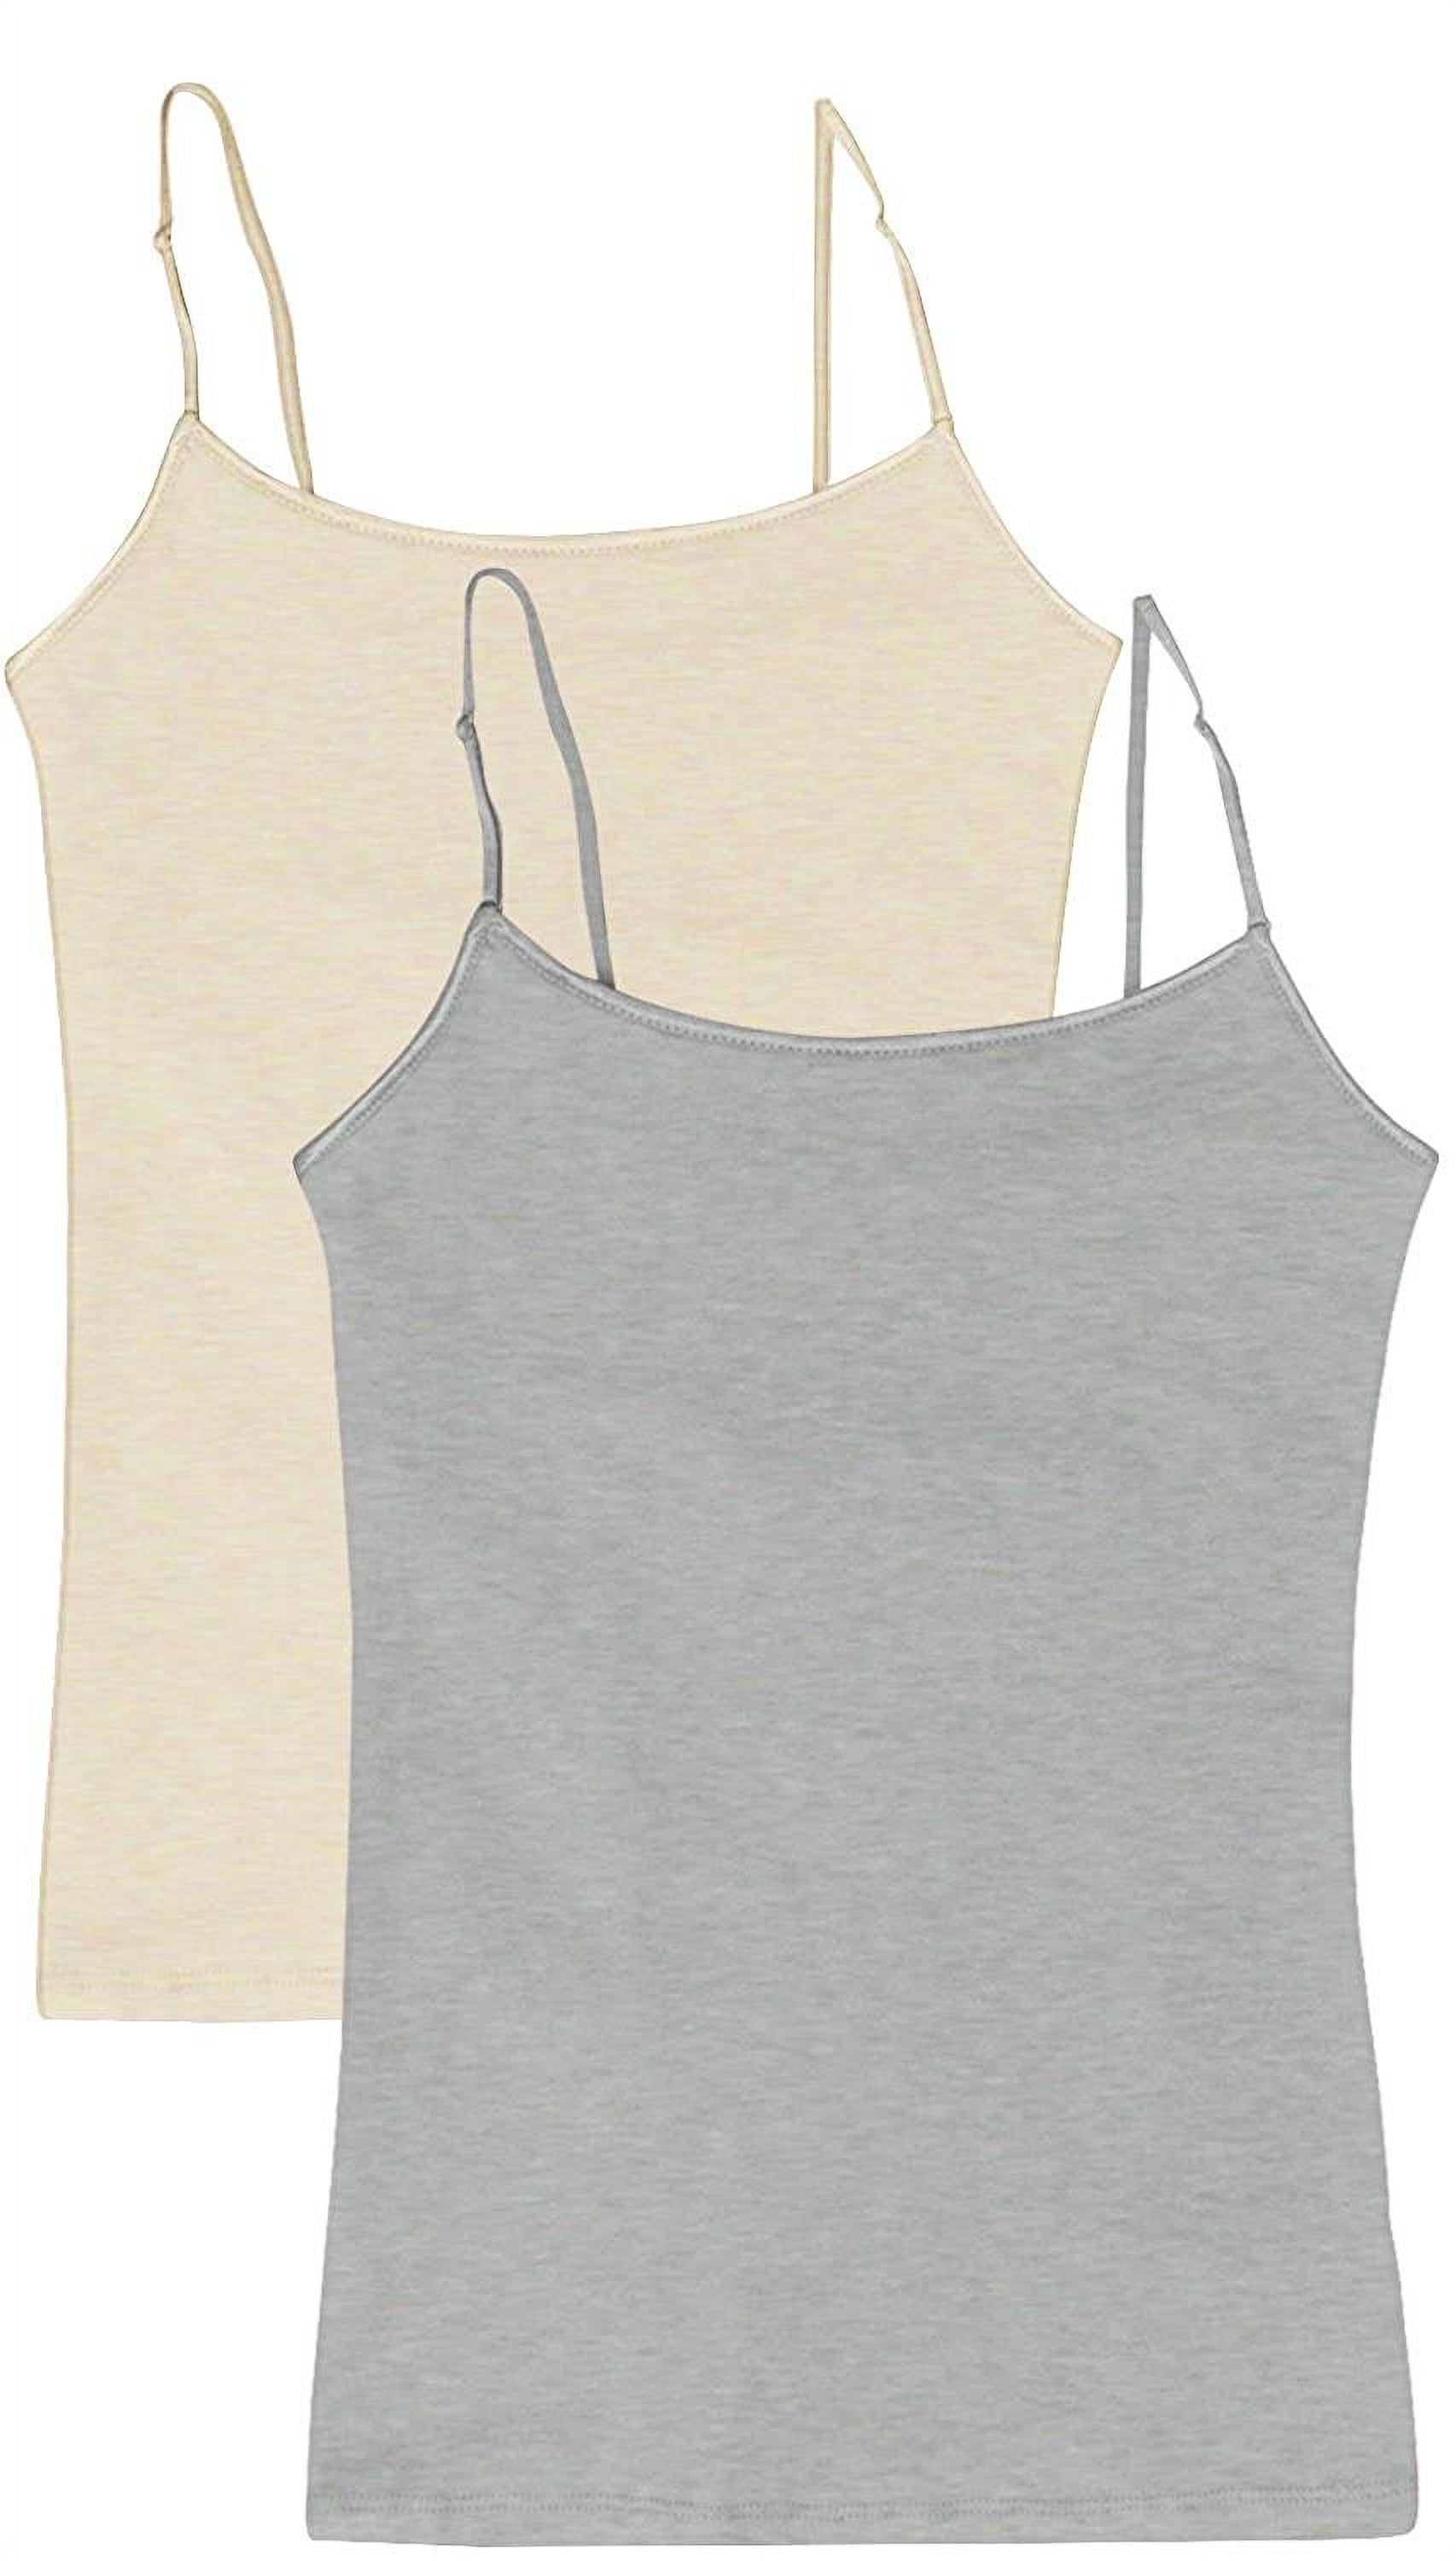 Attraco Women's Cotton Basic Camisoles with Shelf Bra Tank Tops 